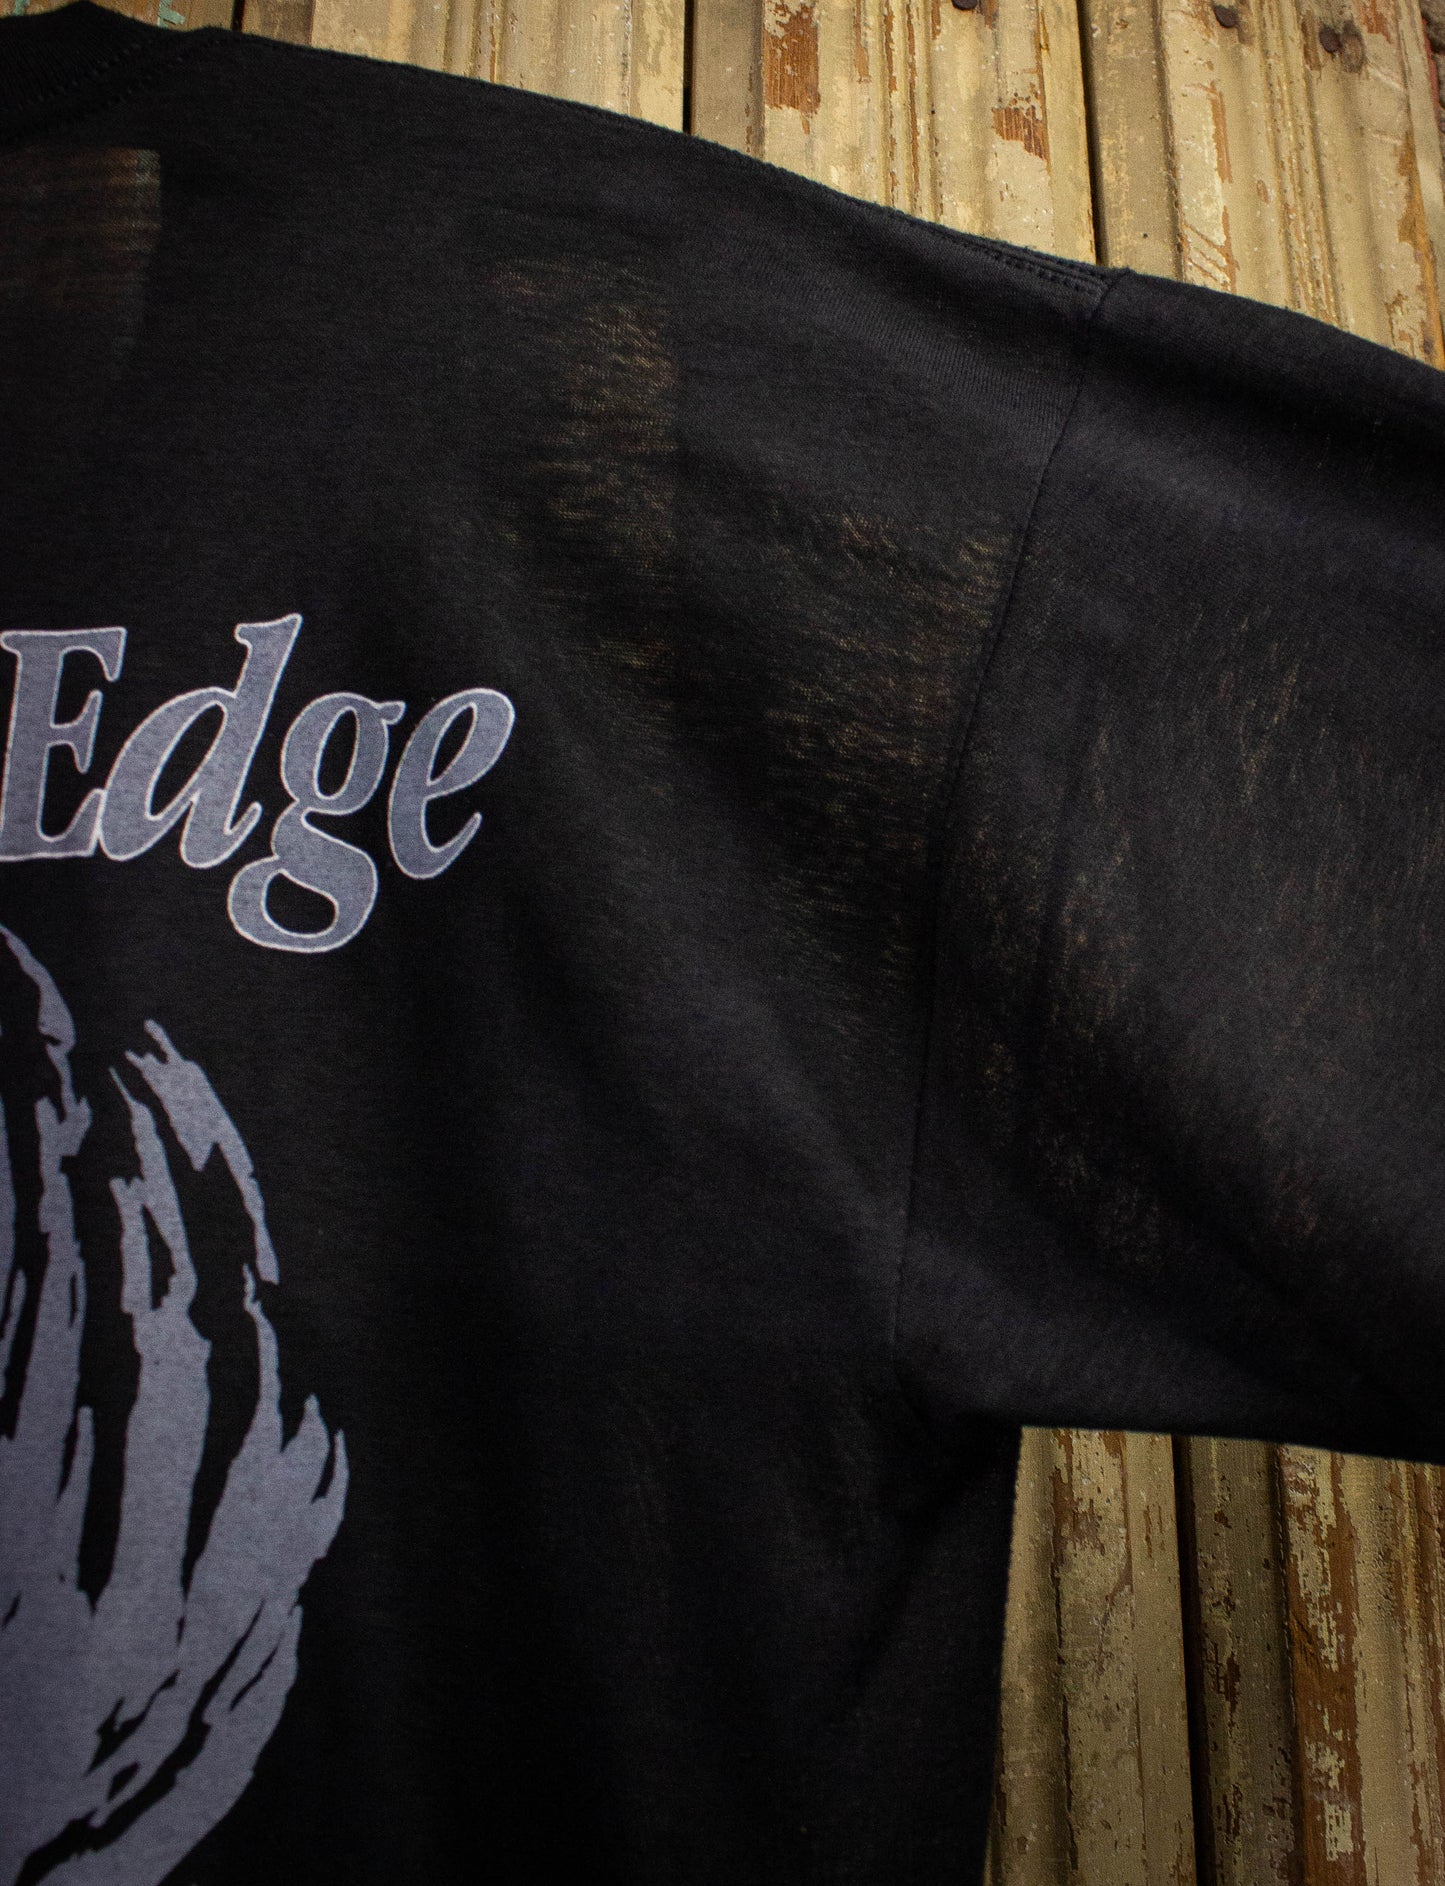 Vintage Hurricane Over The Edge Concert T Shirt 1988 Black Large